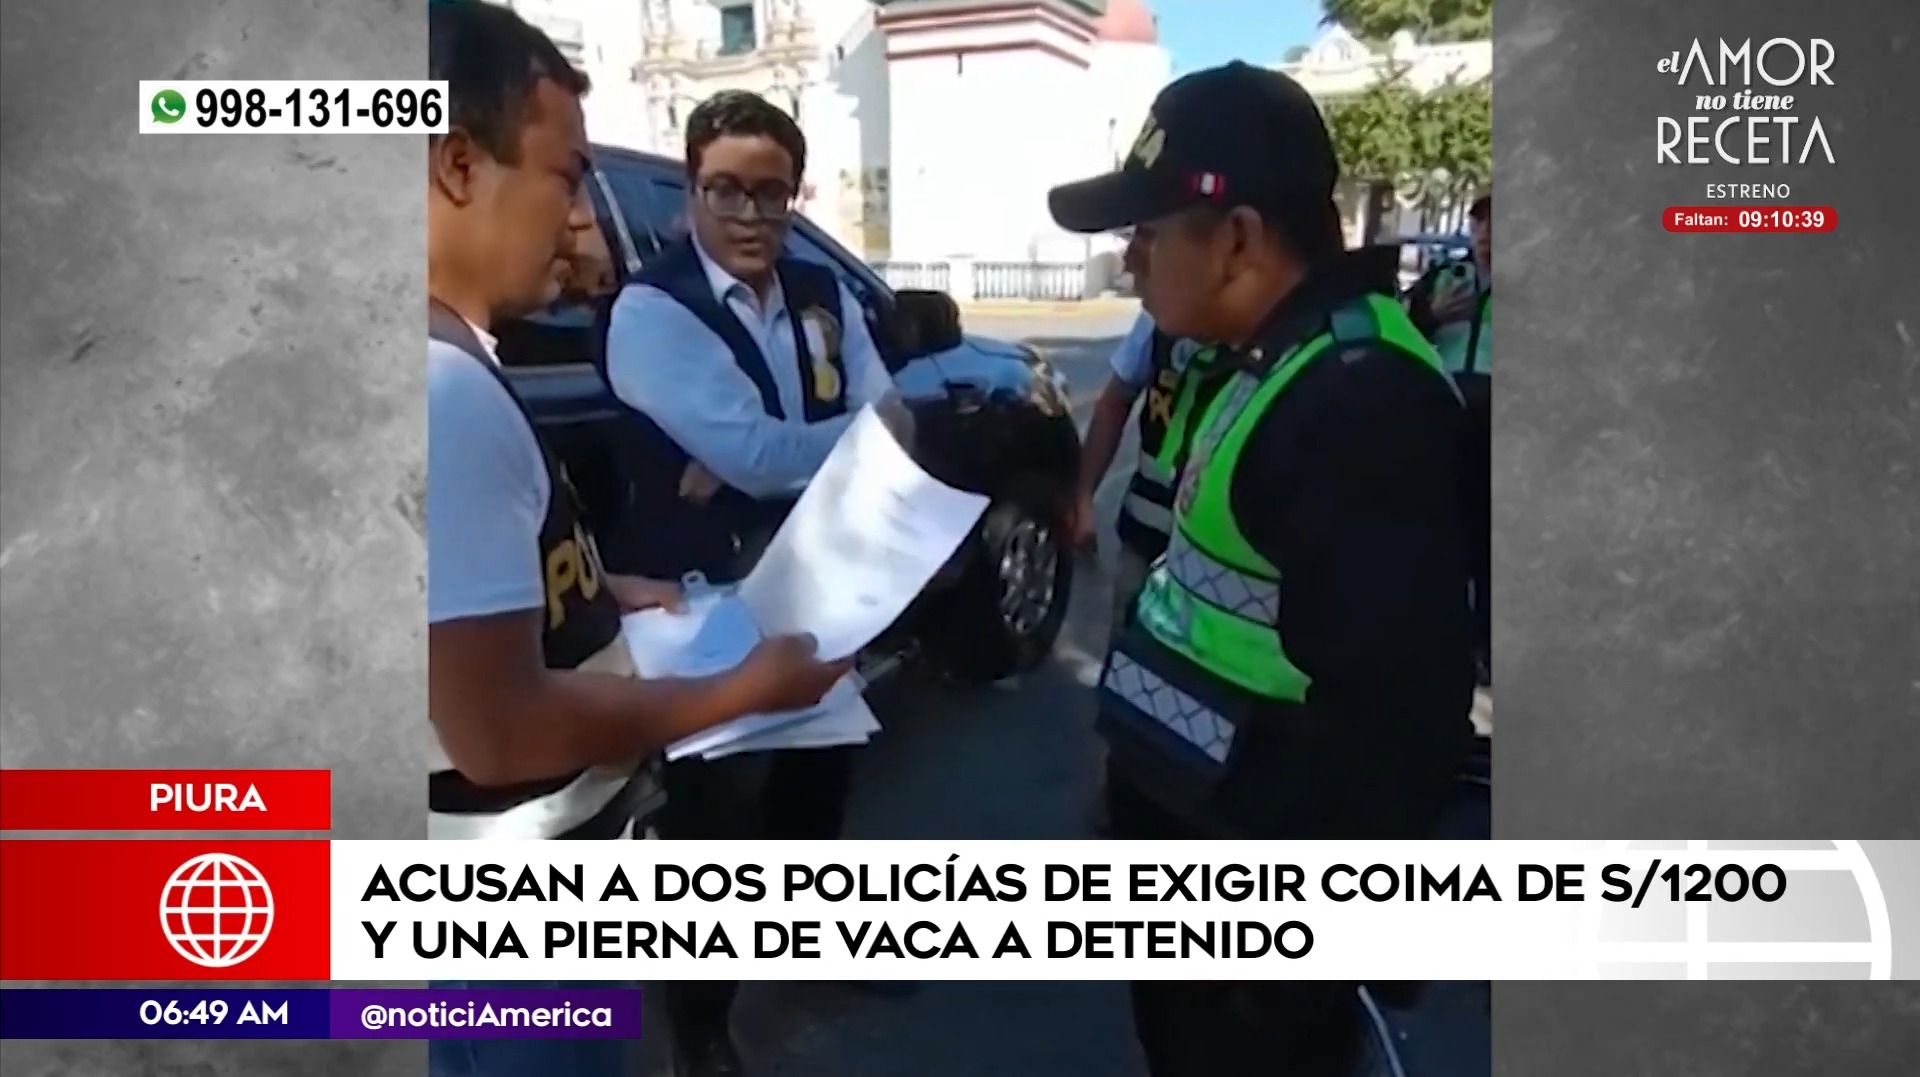 Policías acusados de pedir coima en Piura. Foto: América Noticias